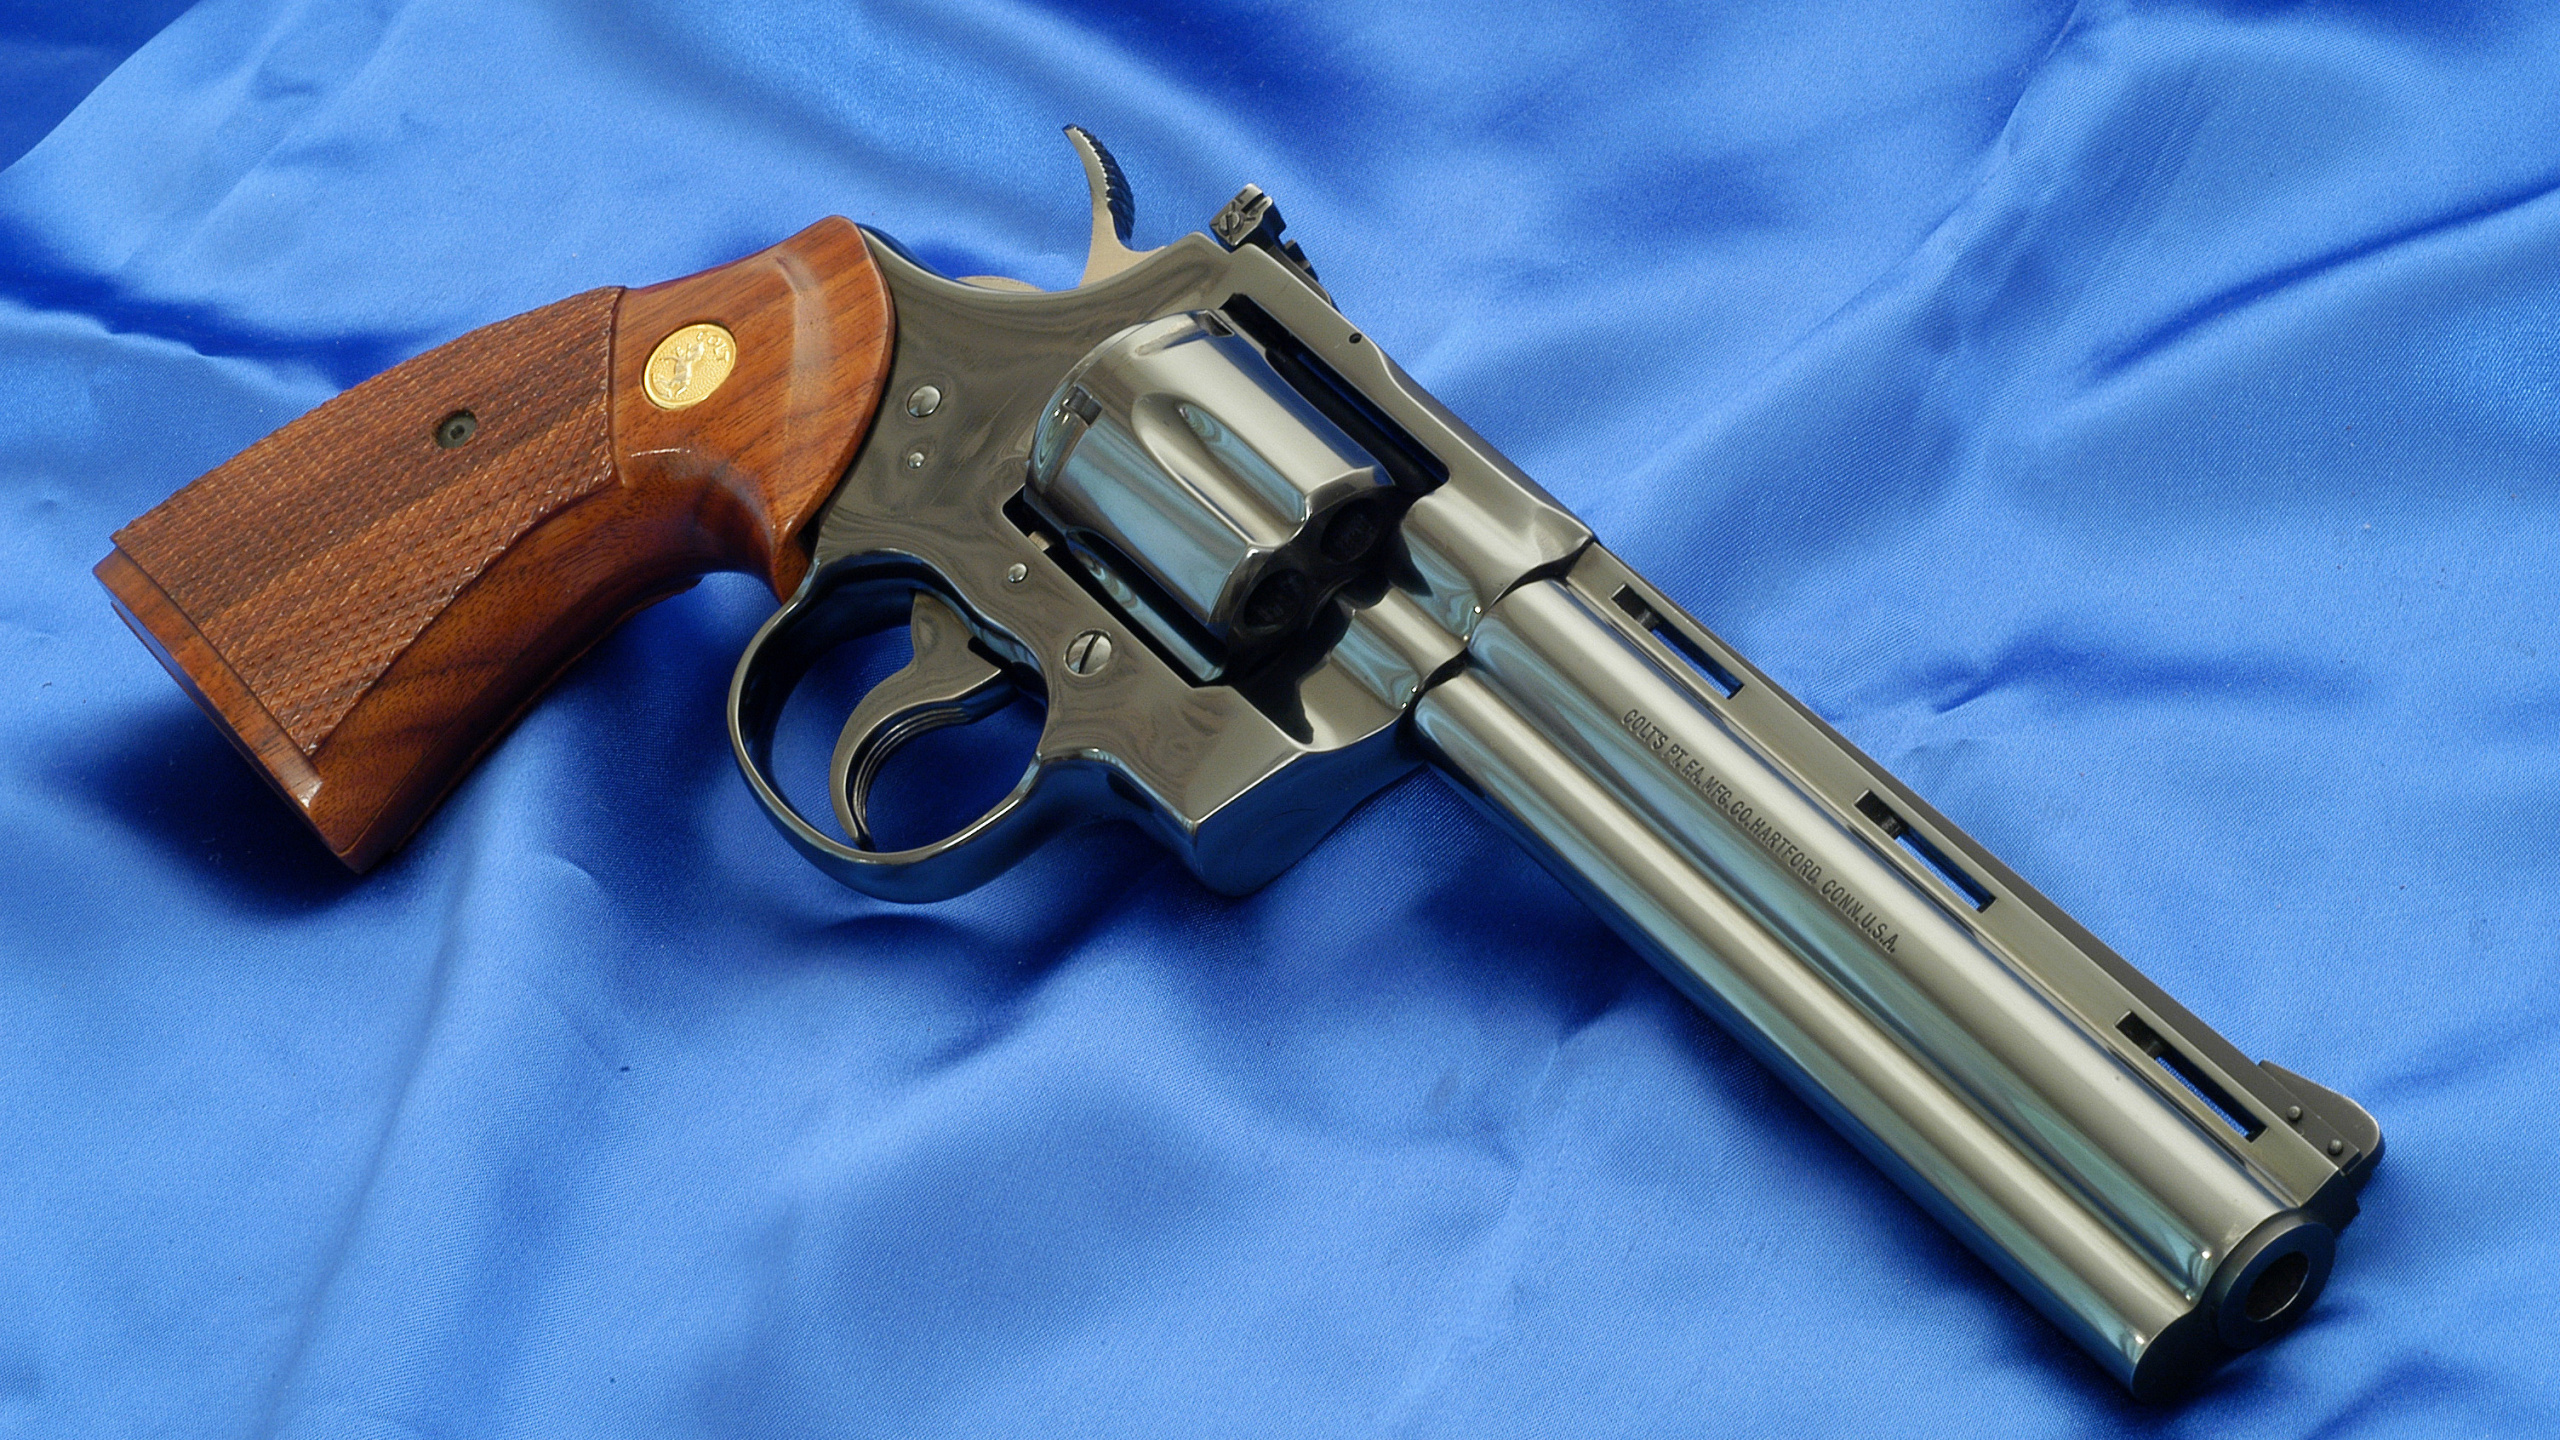 Handfeuerwaffe, M1911 Pistole, Feuerwaffe, Revolver, Trigger. Wallpaper in 2560x1440 Resolution